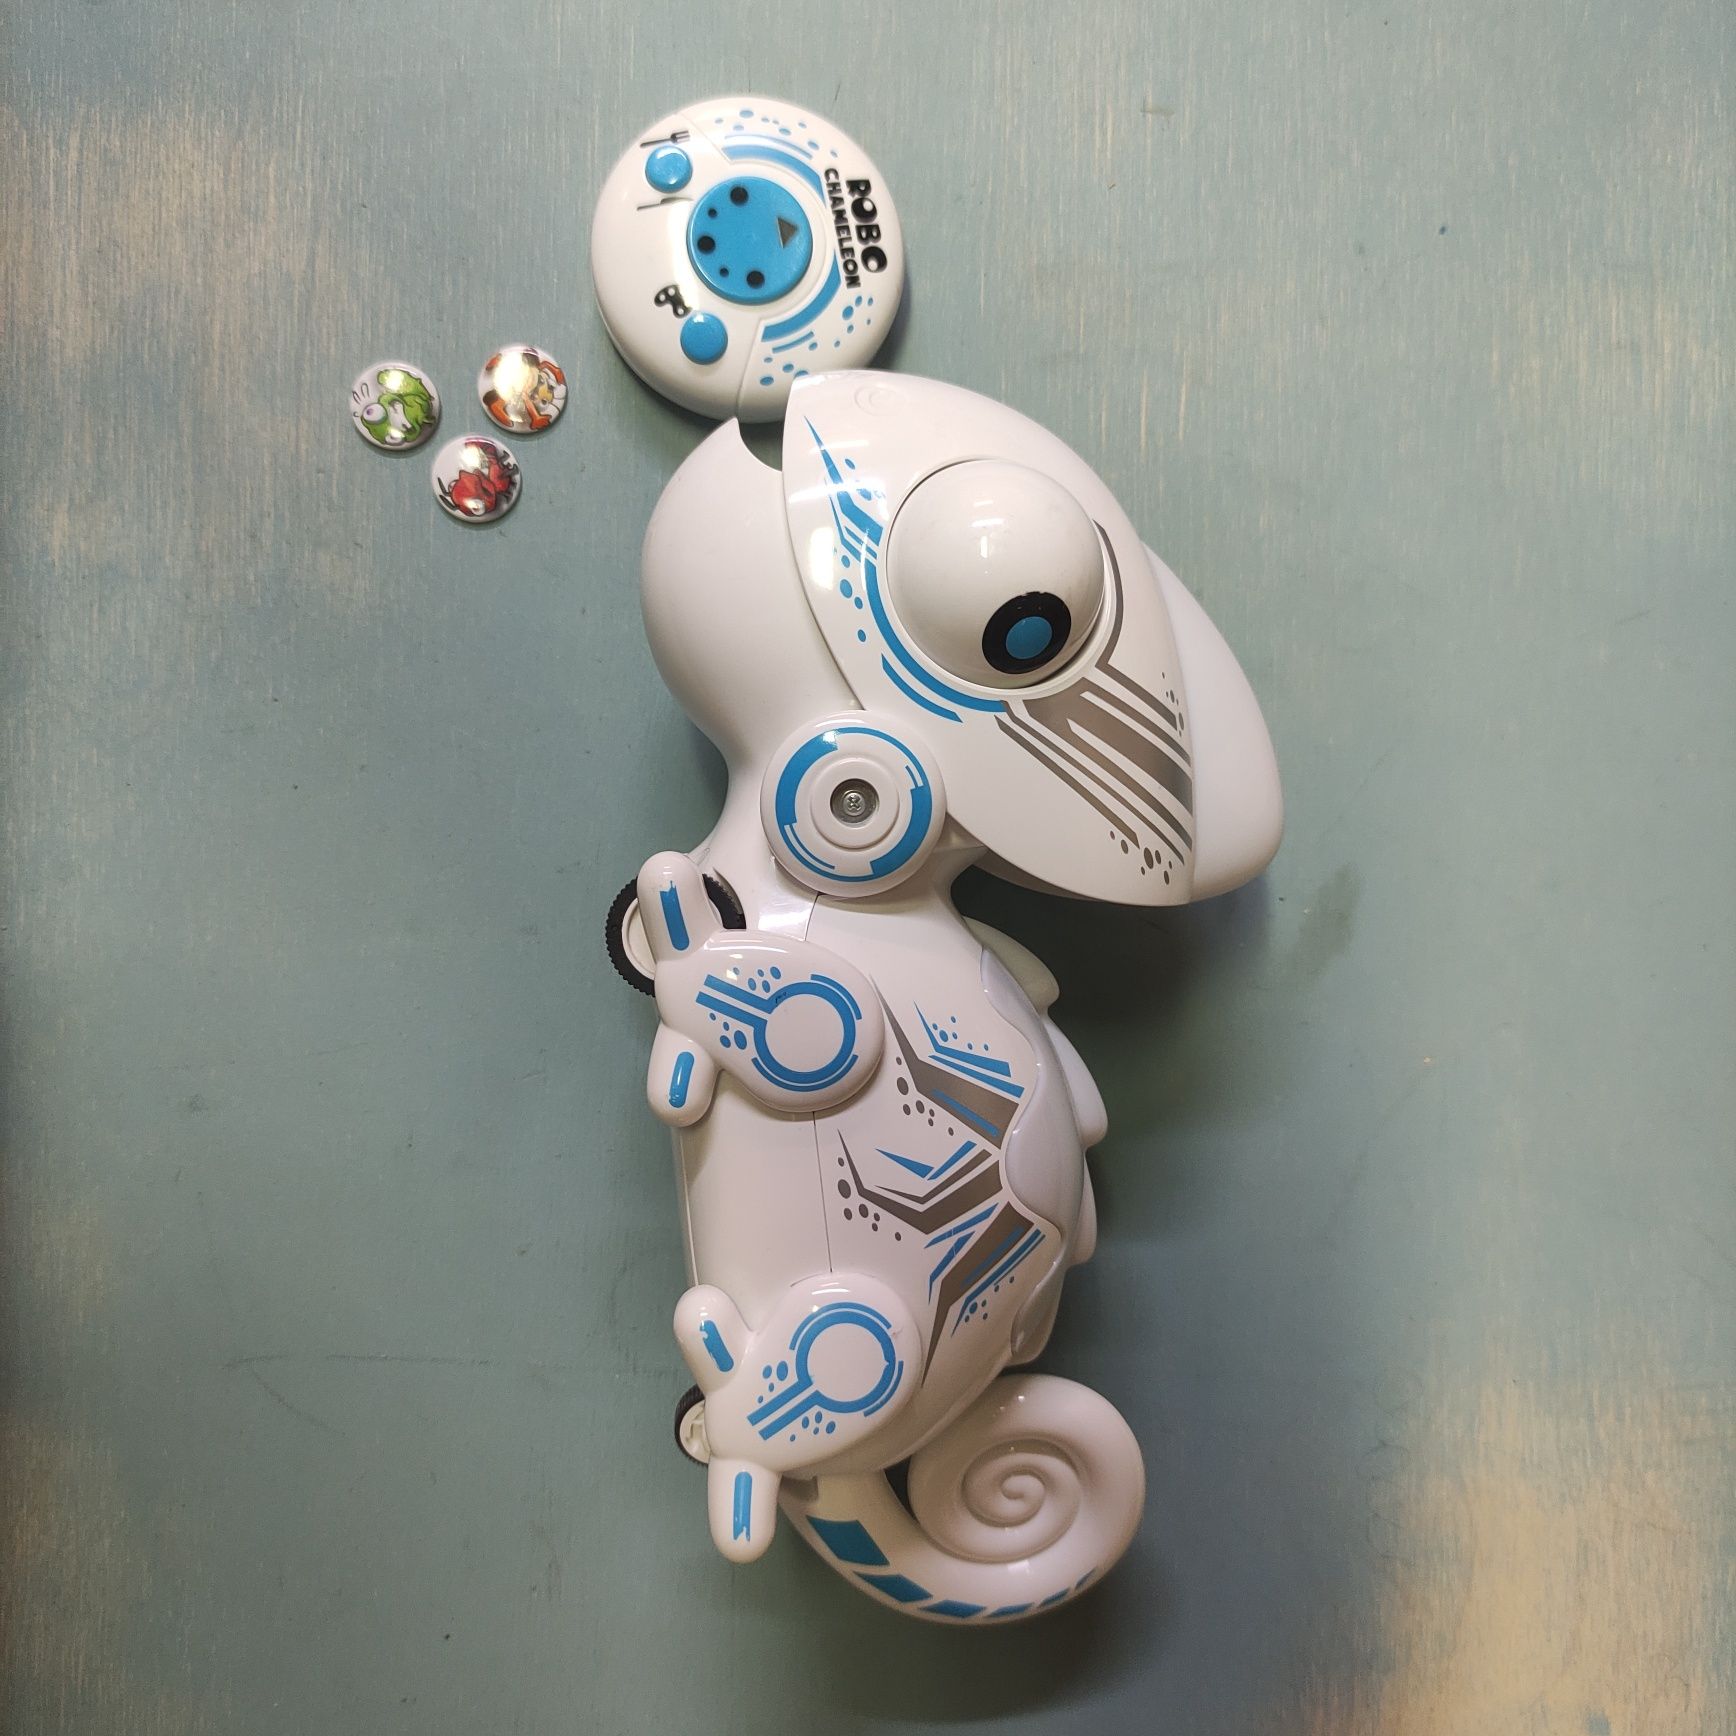 Robot kameleon ROBO CHAMELON zabawka  Silverlit